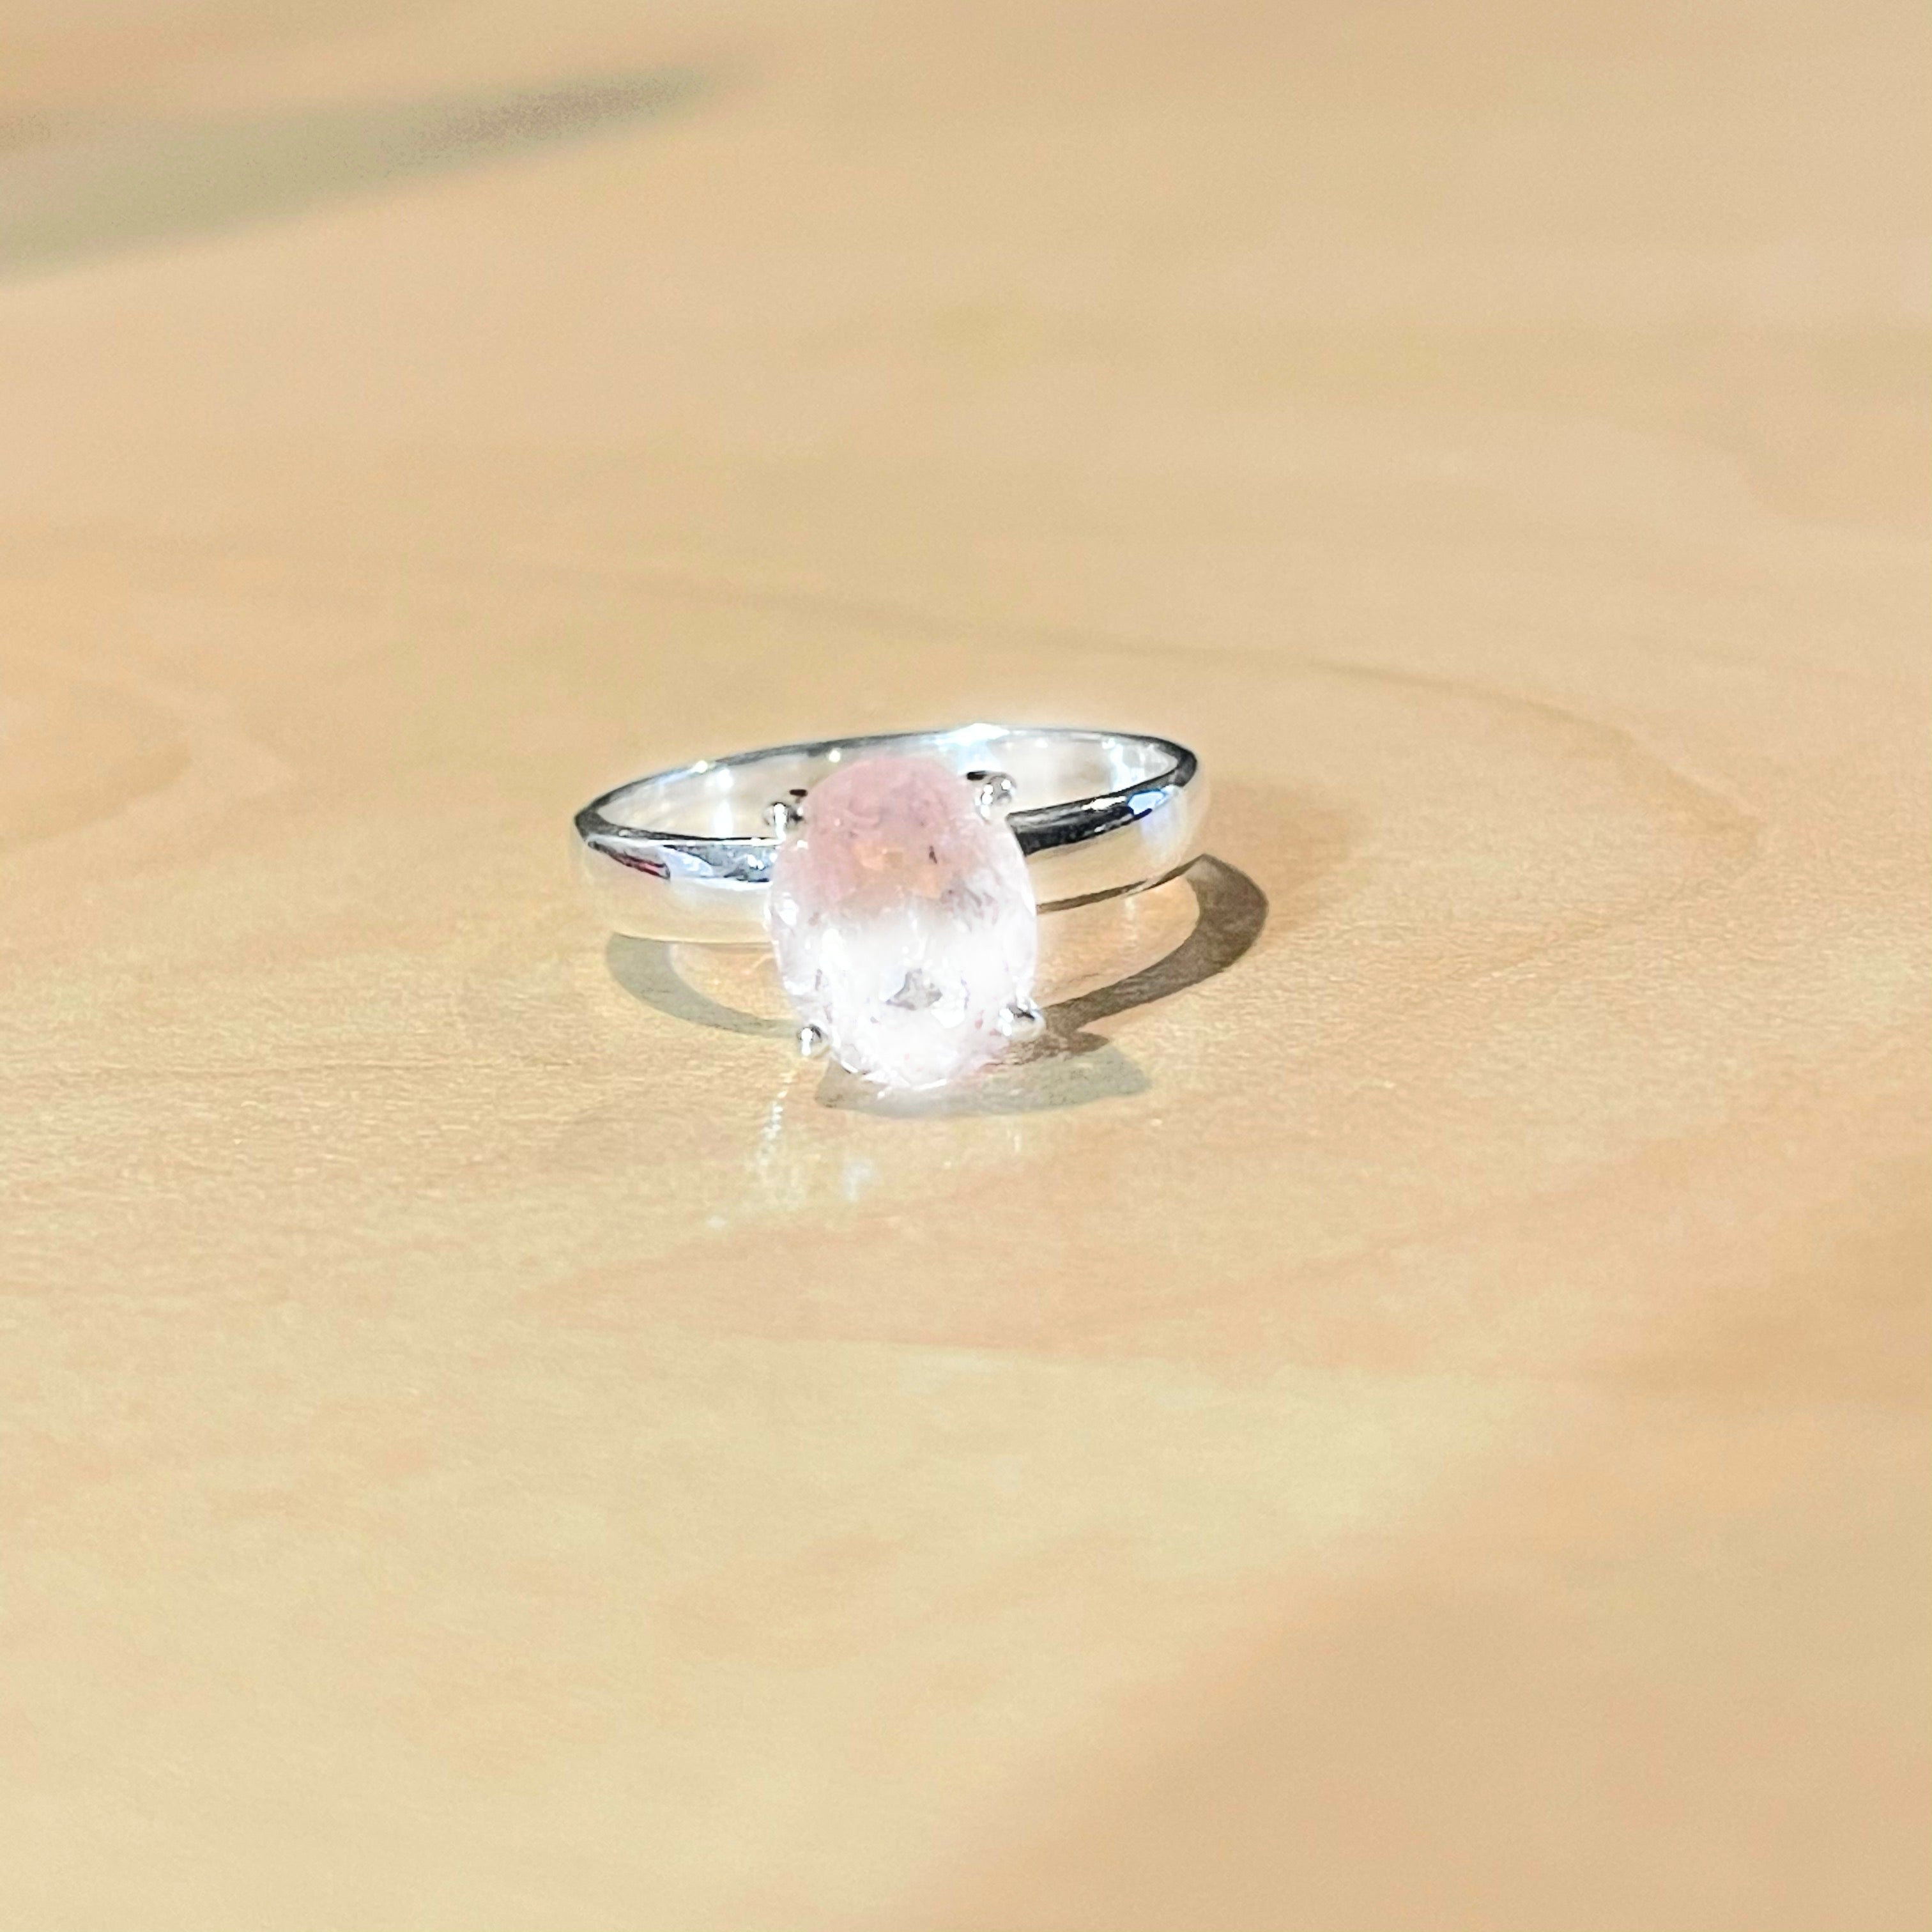 Natural Pink Morganite 925 Sterling Silver Engagement Ring Size 6.25 - Natural Rocks by Kala